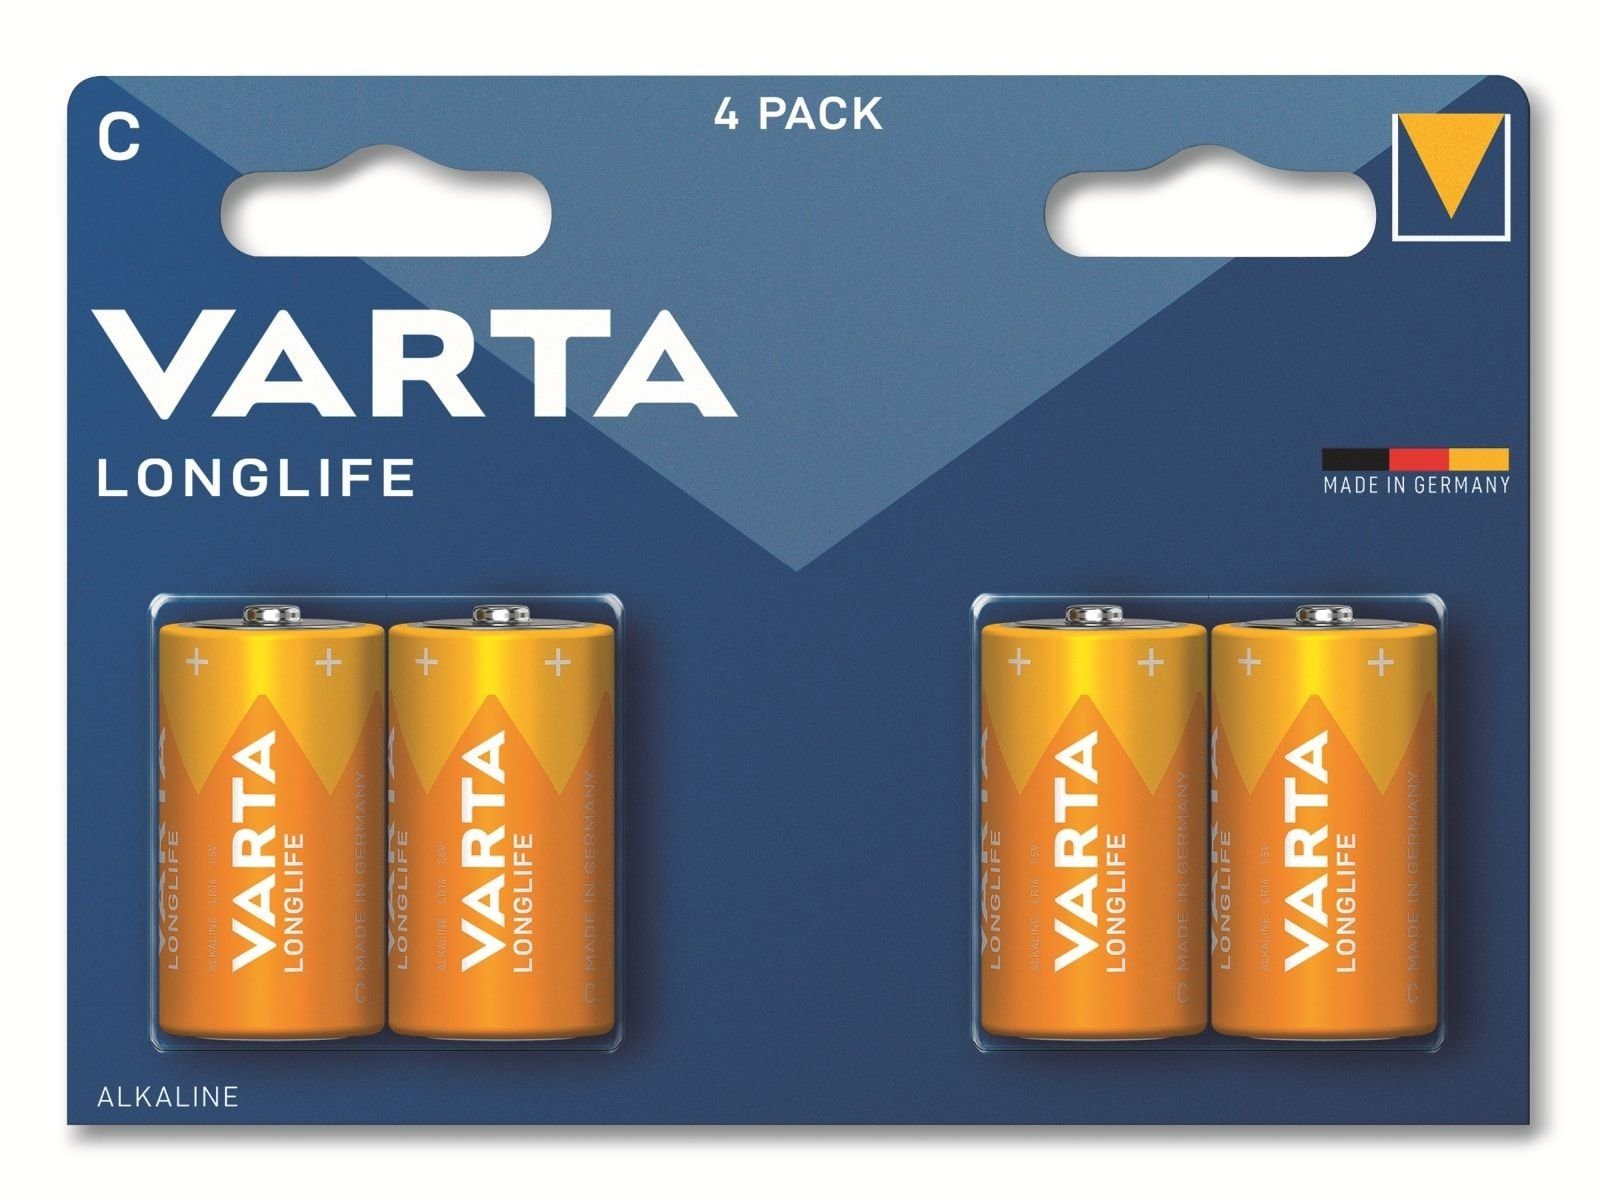 VARTA VARTA Batterie Alkaline, Baby, C, LR14, 1.5V Batterie